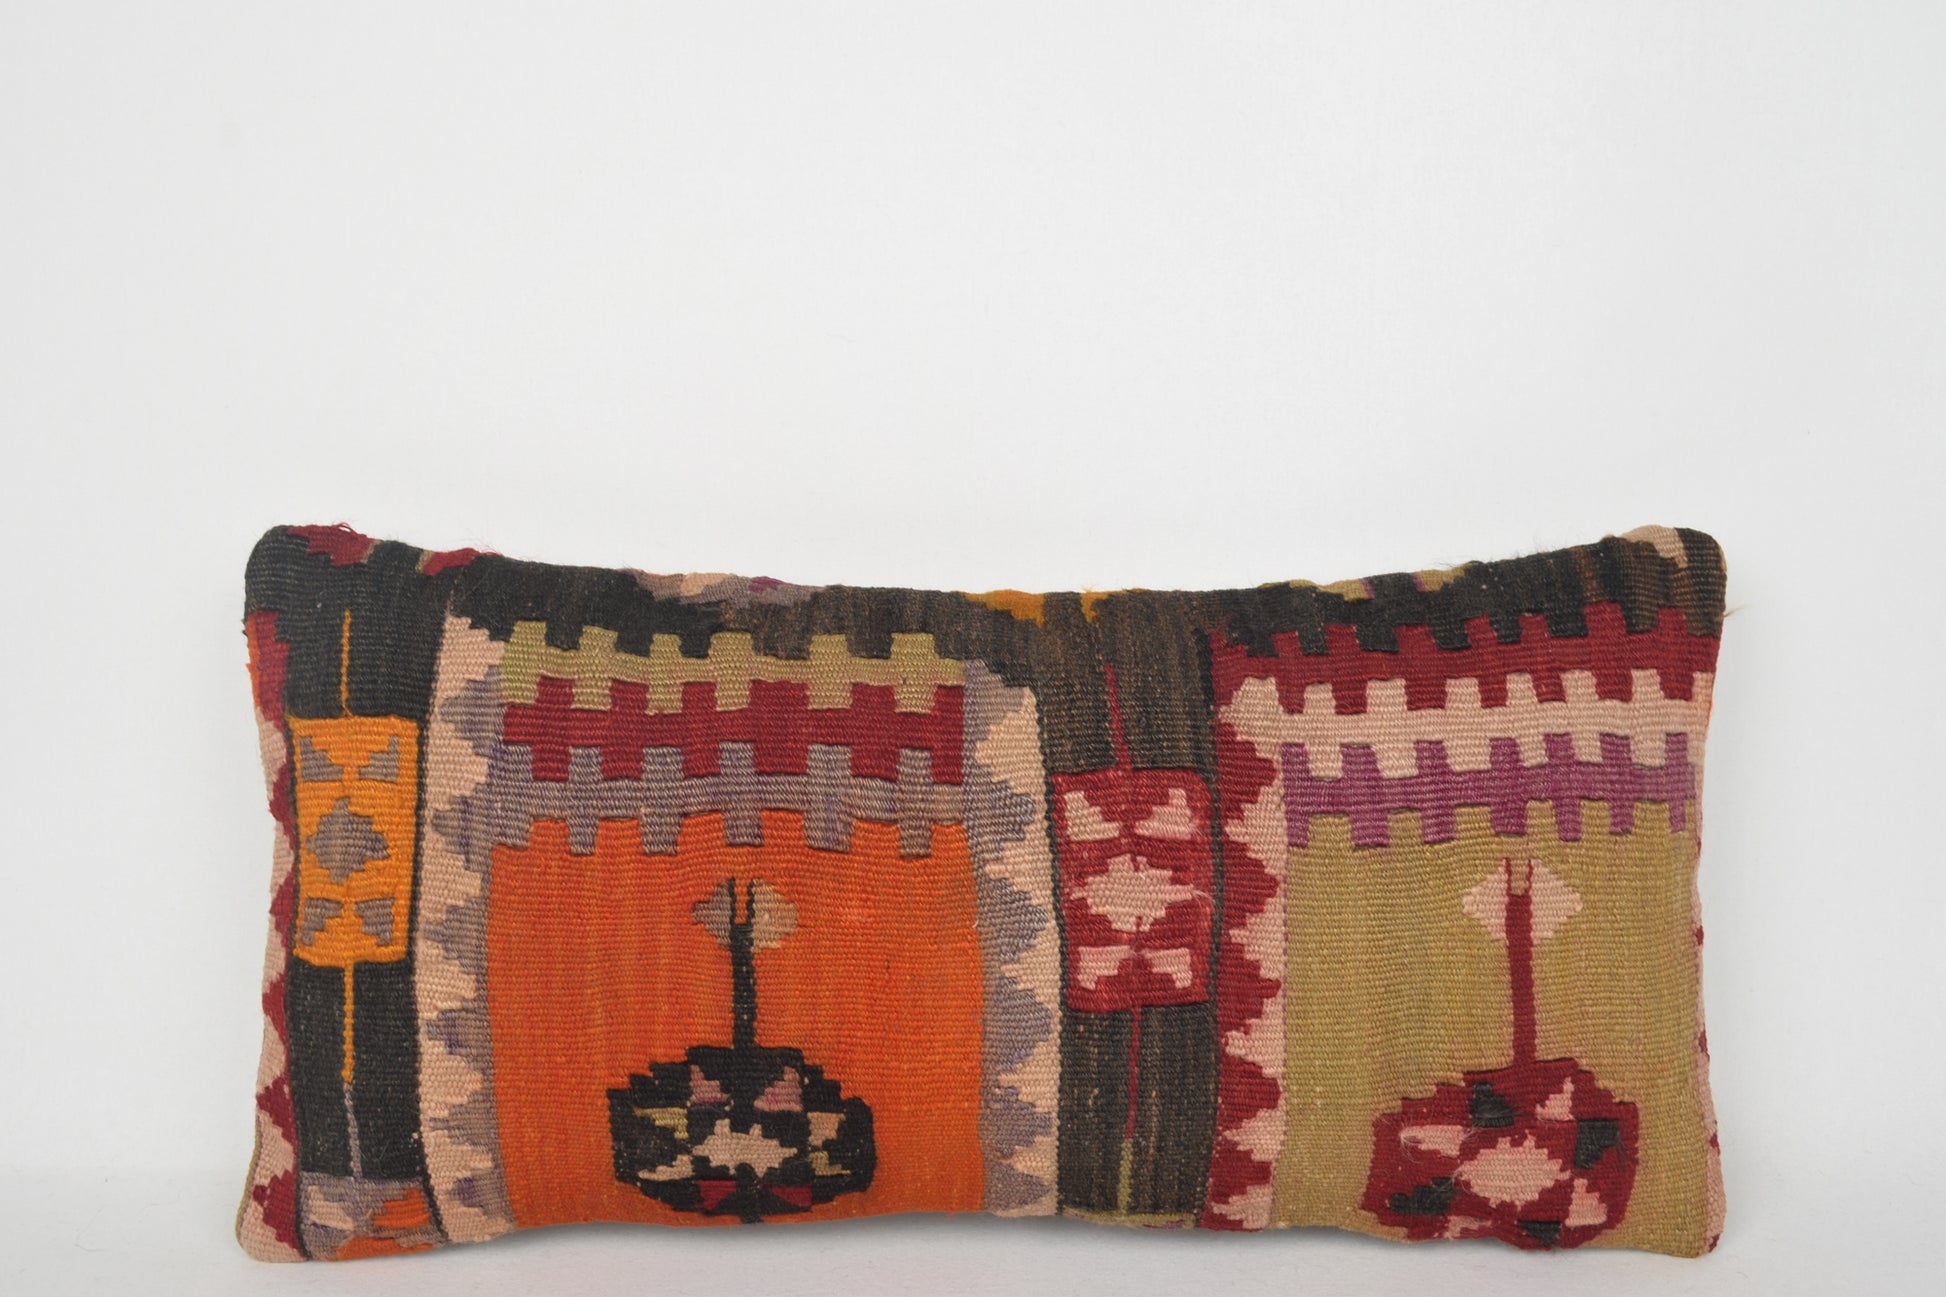 Vintage Hemp Pillows, Kilim Rug Rooster Pillow Lumbar F00175 12x24 " - 30x60 cm.